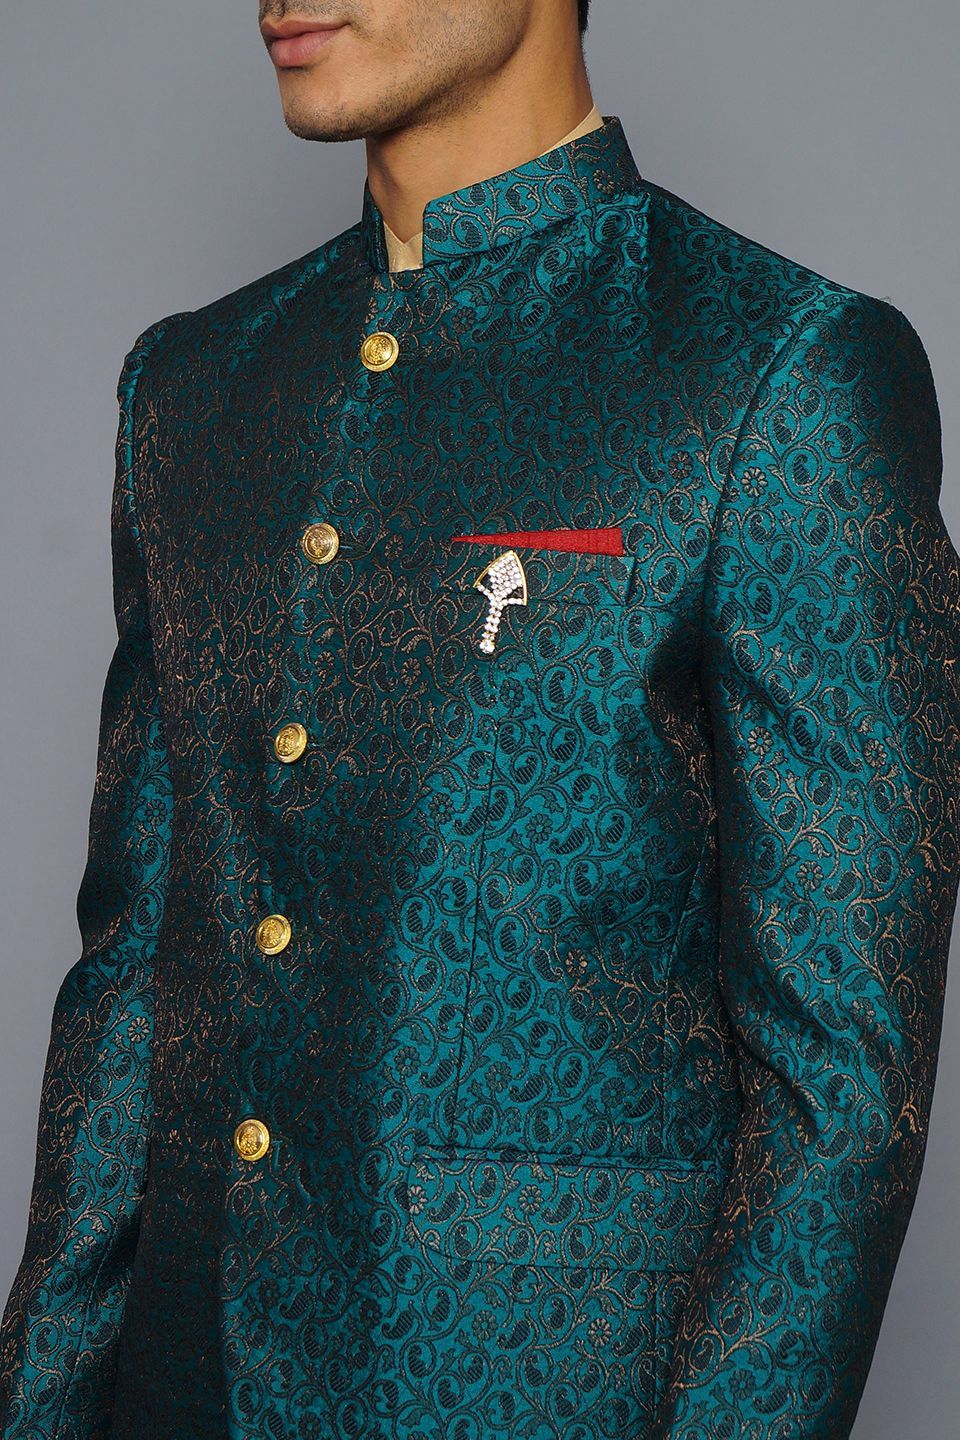 Wintage Men's Banarsi Rayon Cotton Casual and Festive Indian Jodhpuri Grandad Bandhgala Blazer : Green